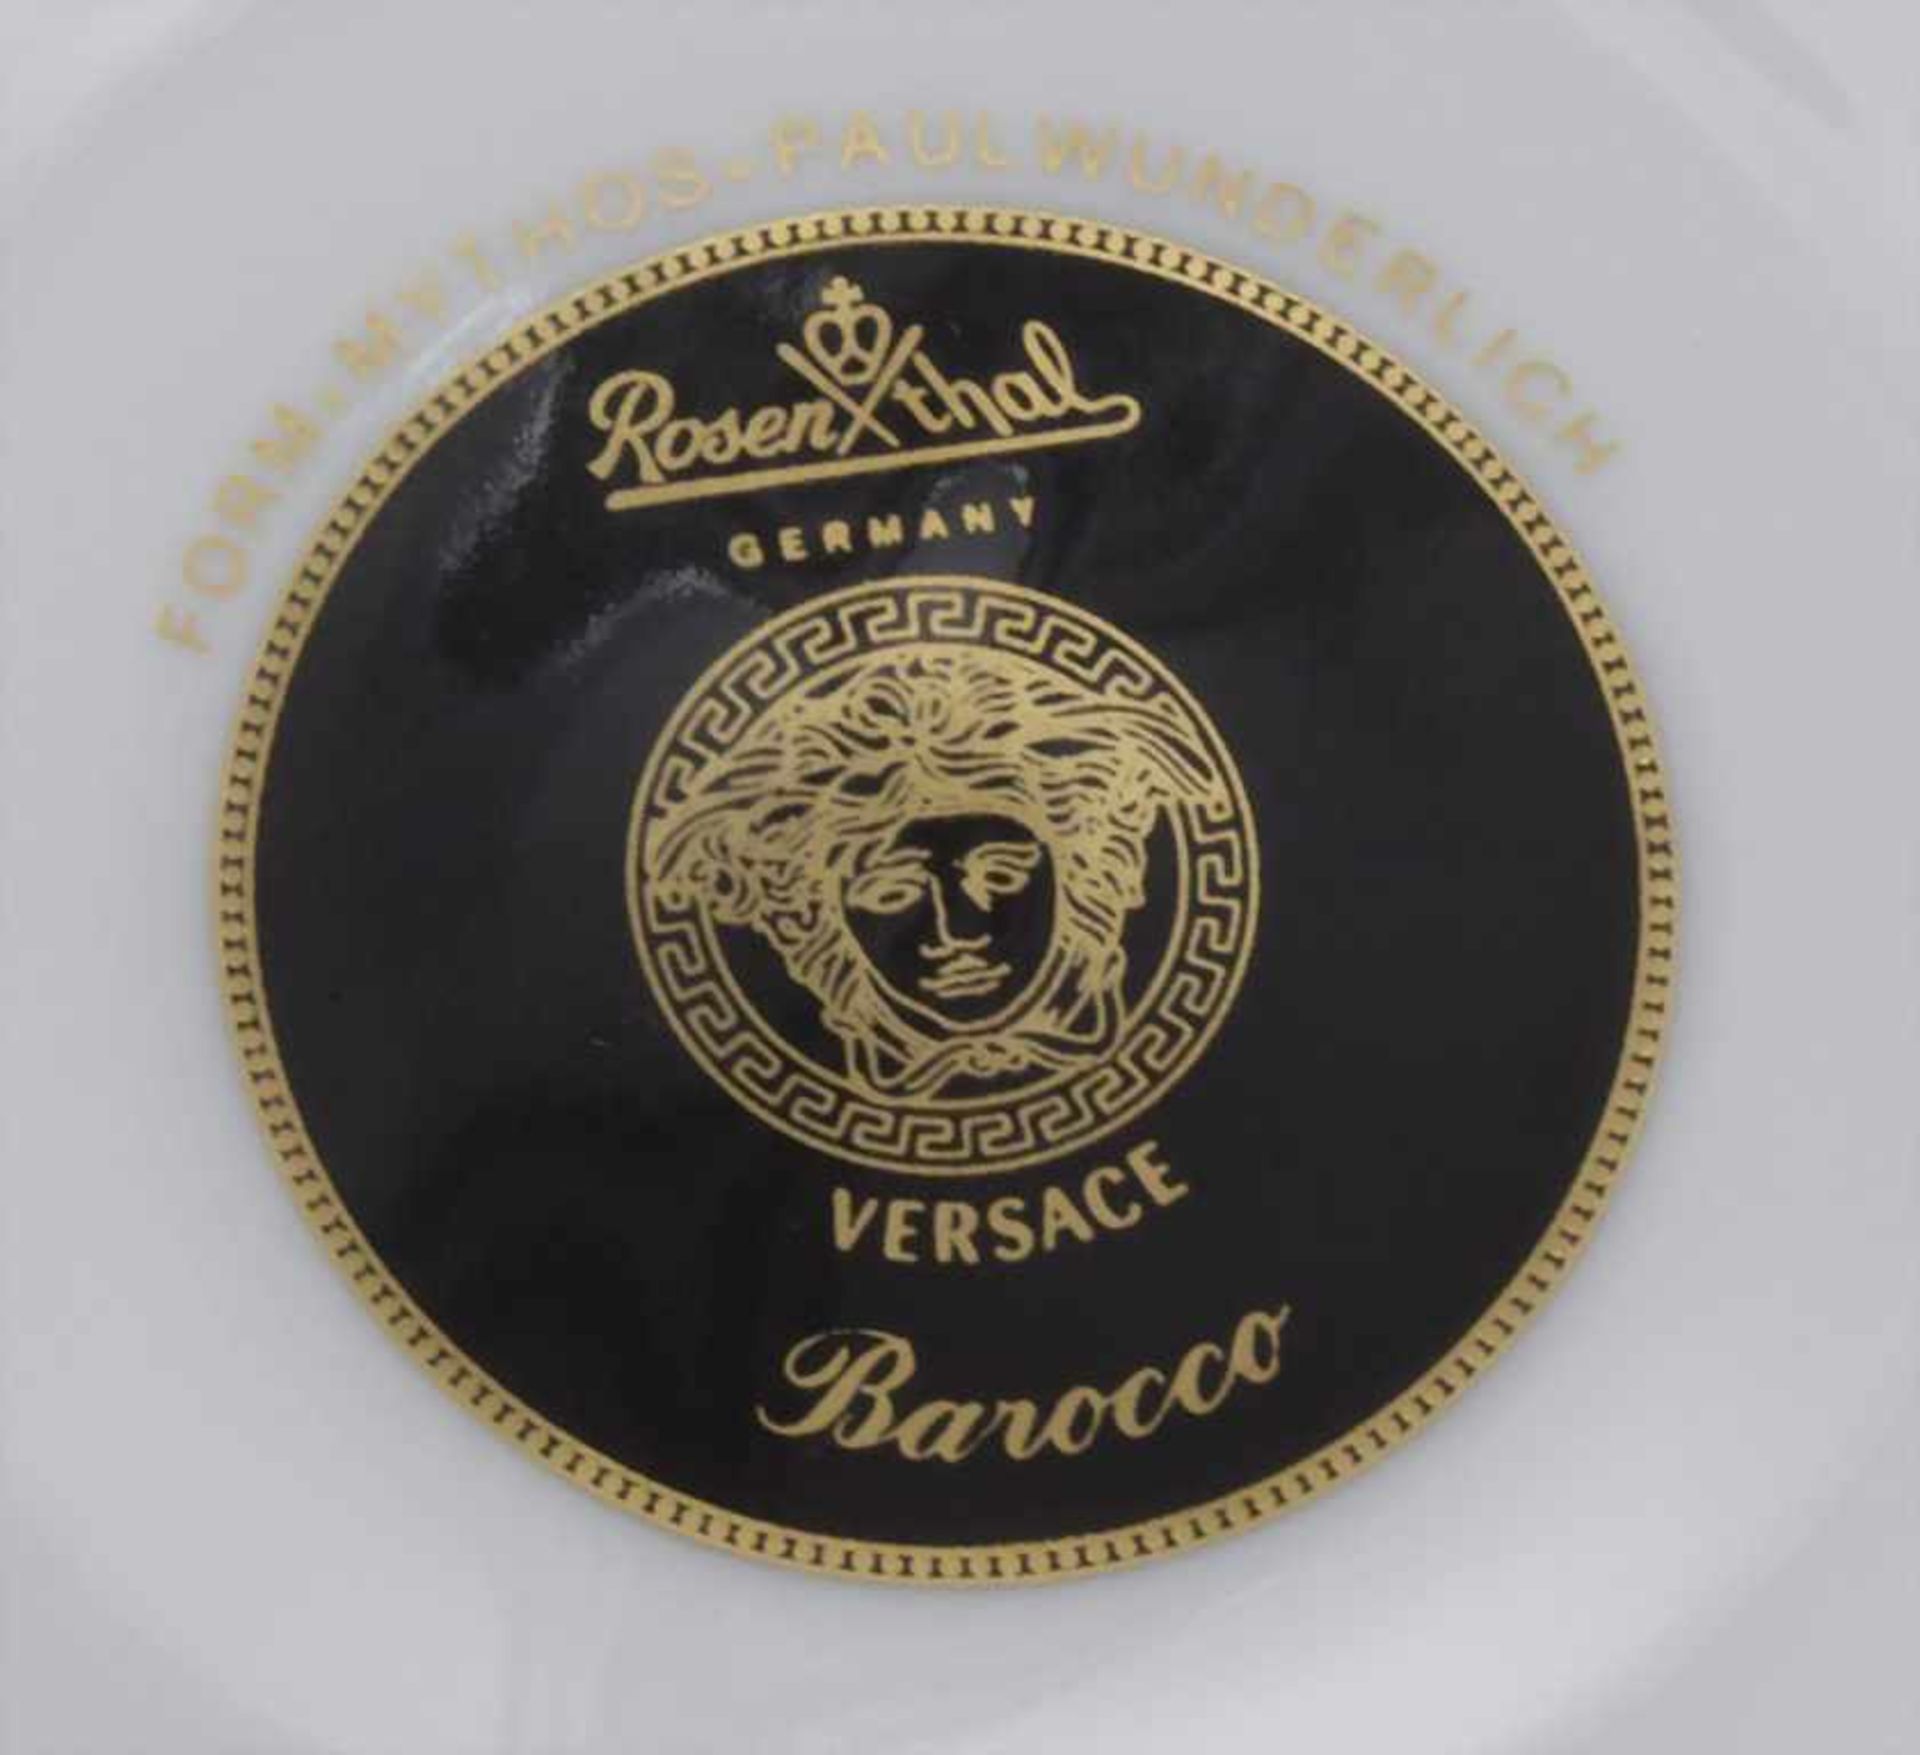 2 Gedecke mit Platte 'Barocco' / 2 place settings with a plate 'Barocco', Versace für Rosenthal, 20. - Bild 10 aus 11